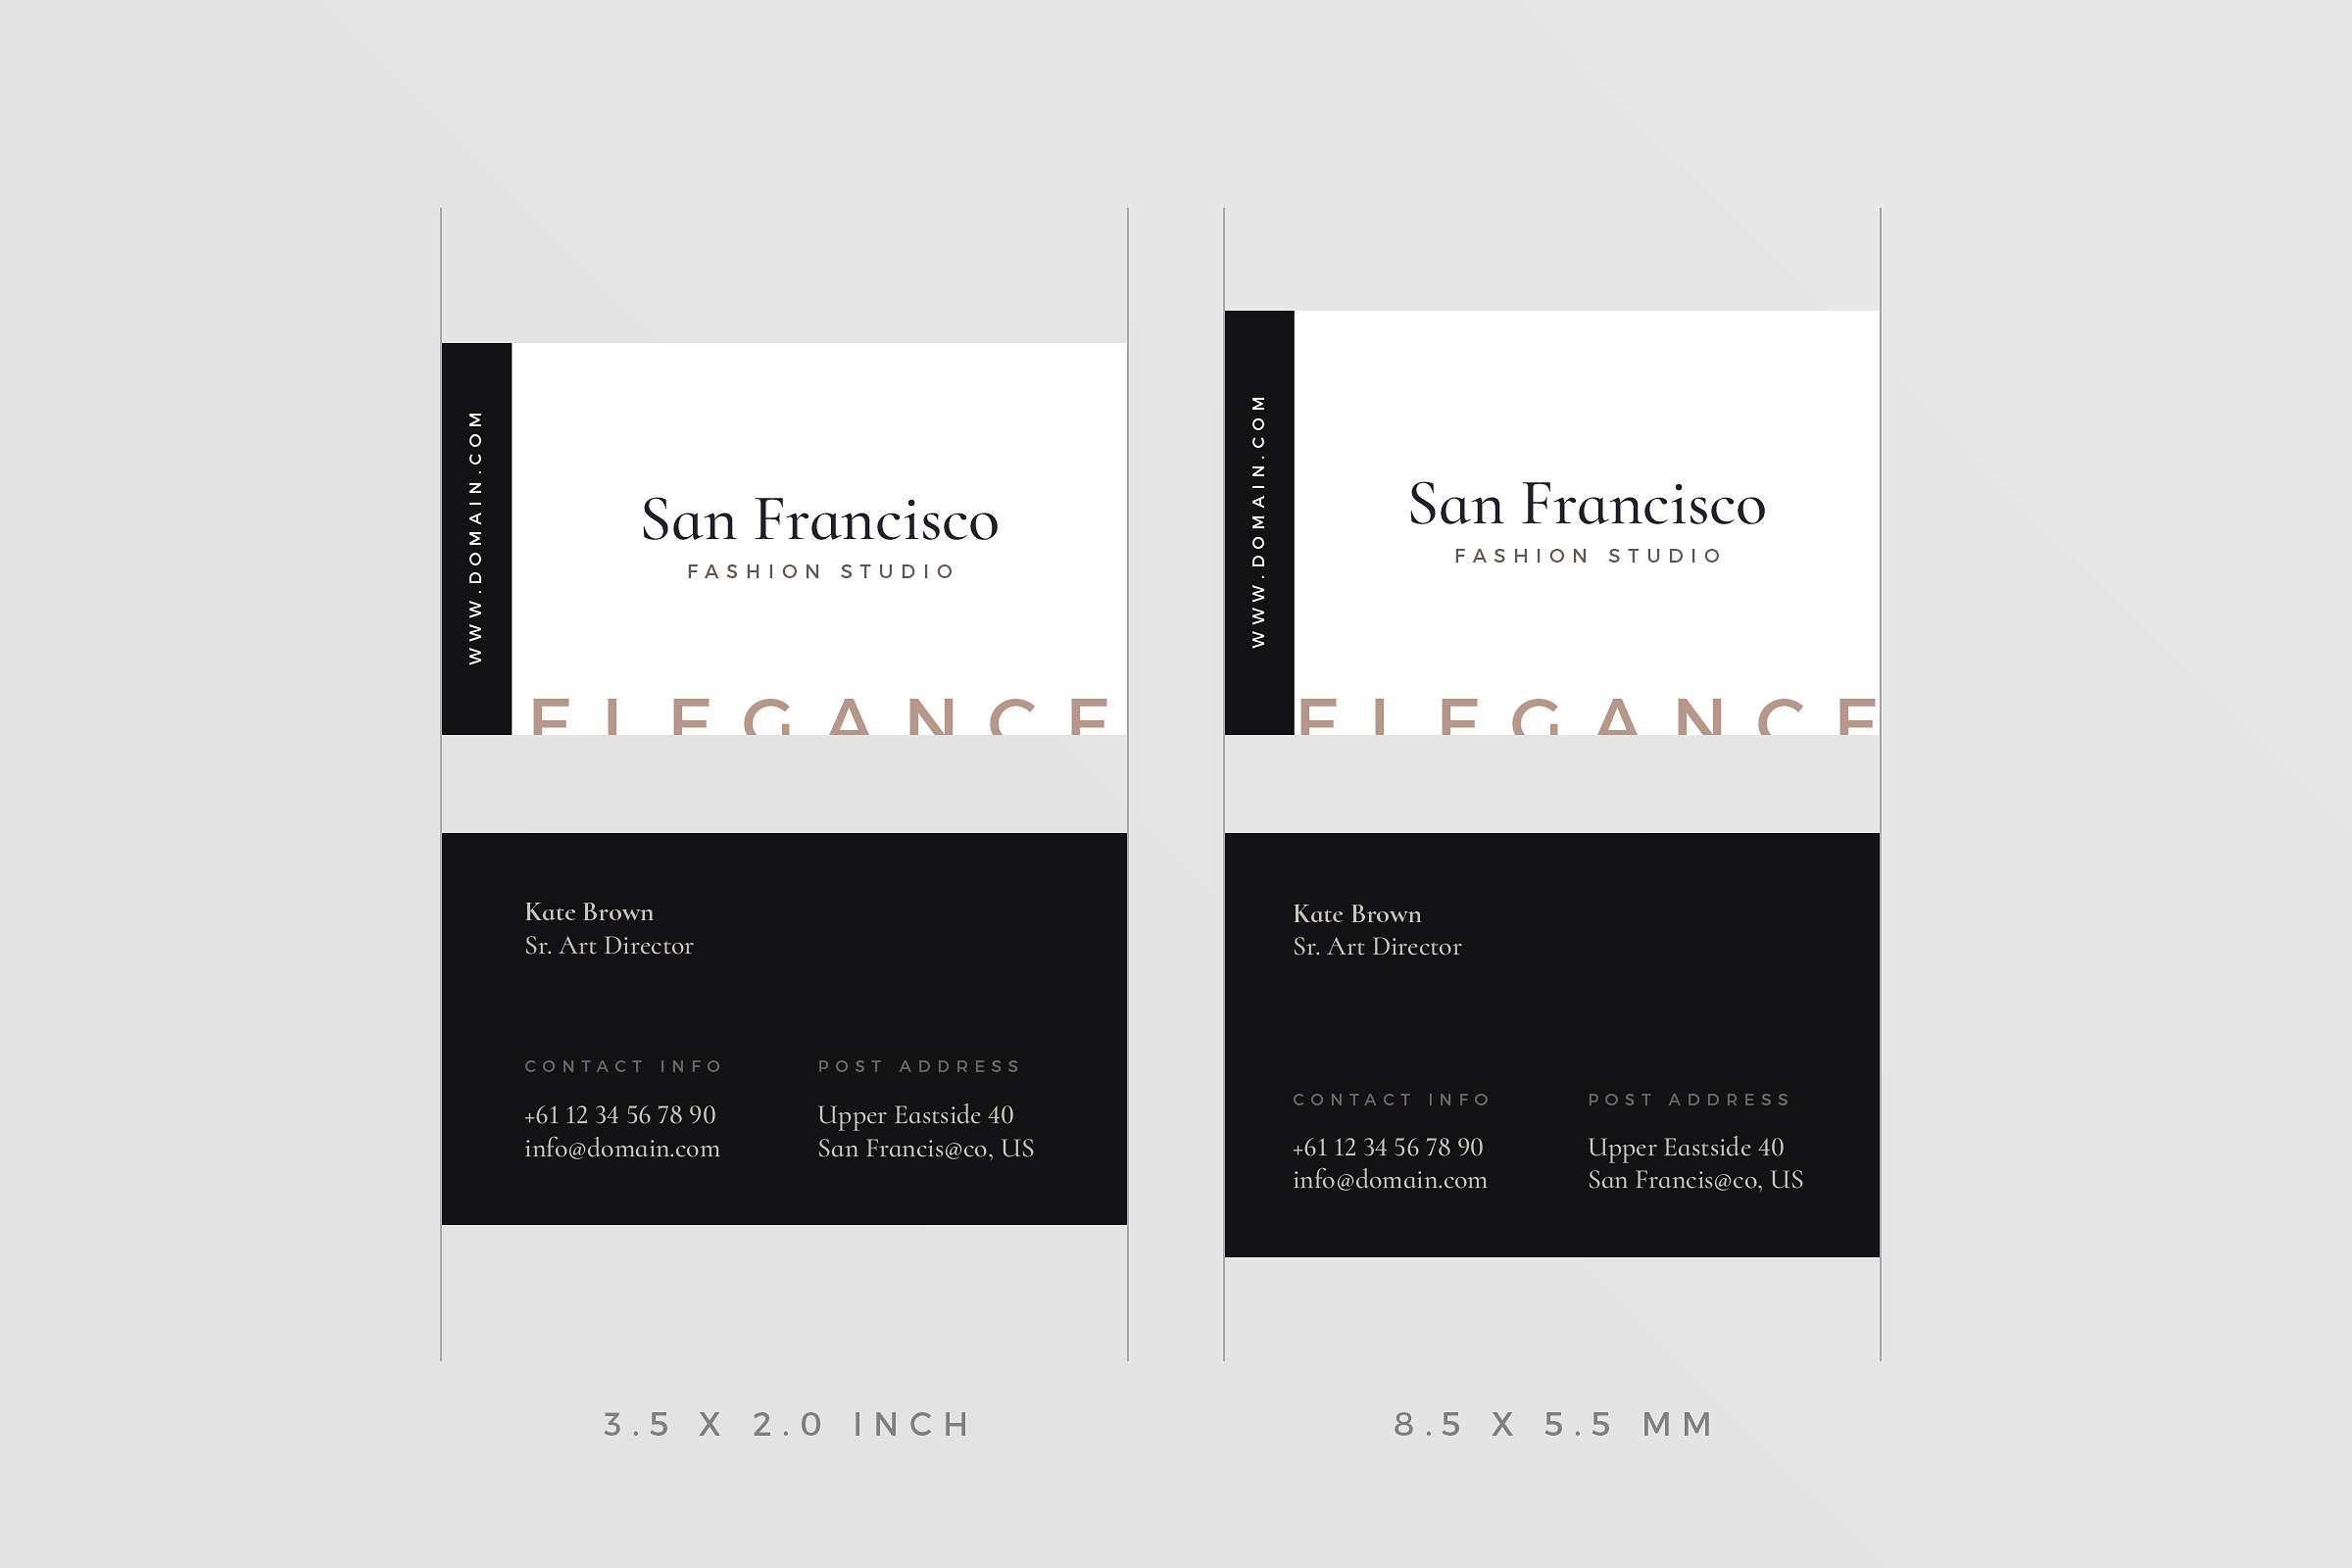 极简主义企业名片设计模板3 San Francisco Business Cards插图(4)